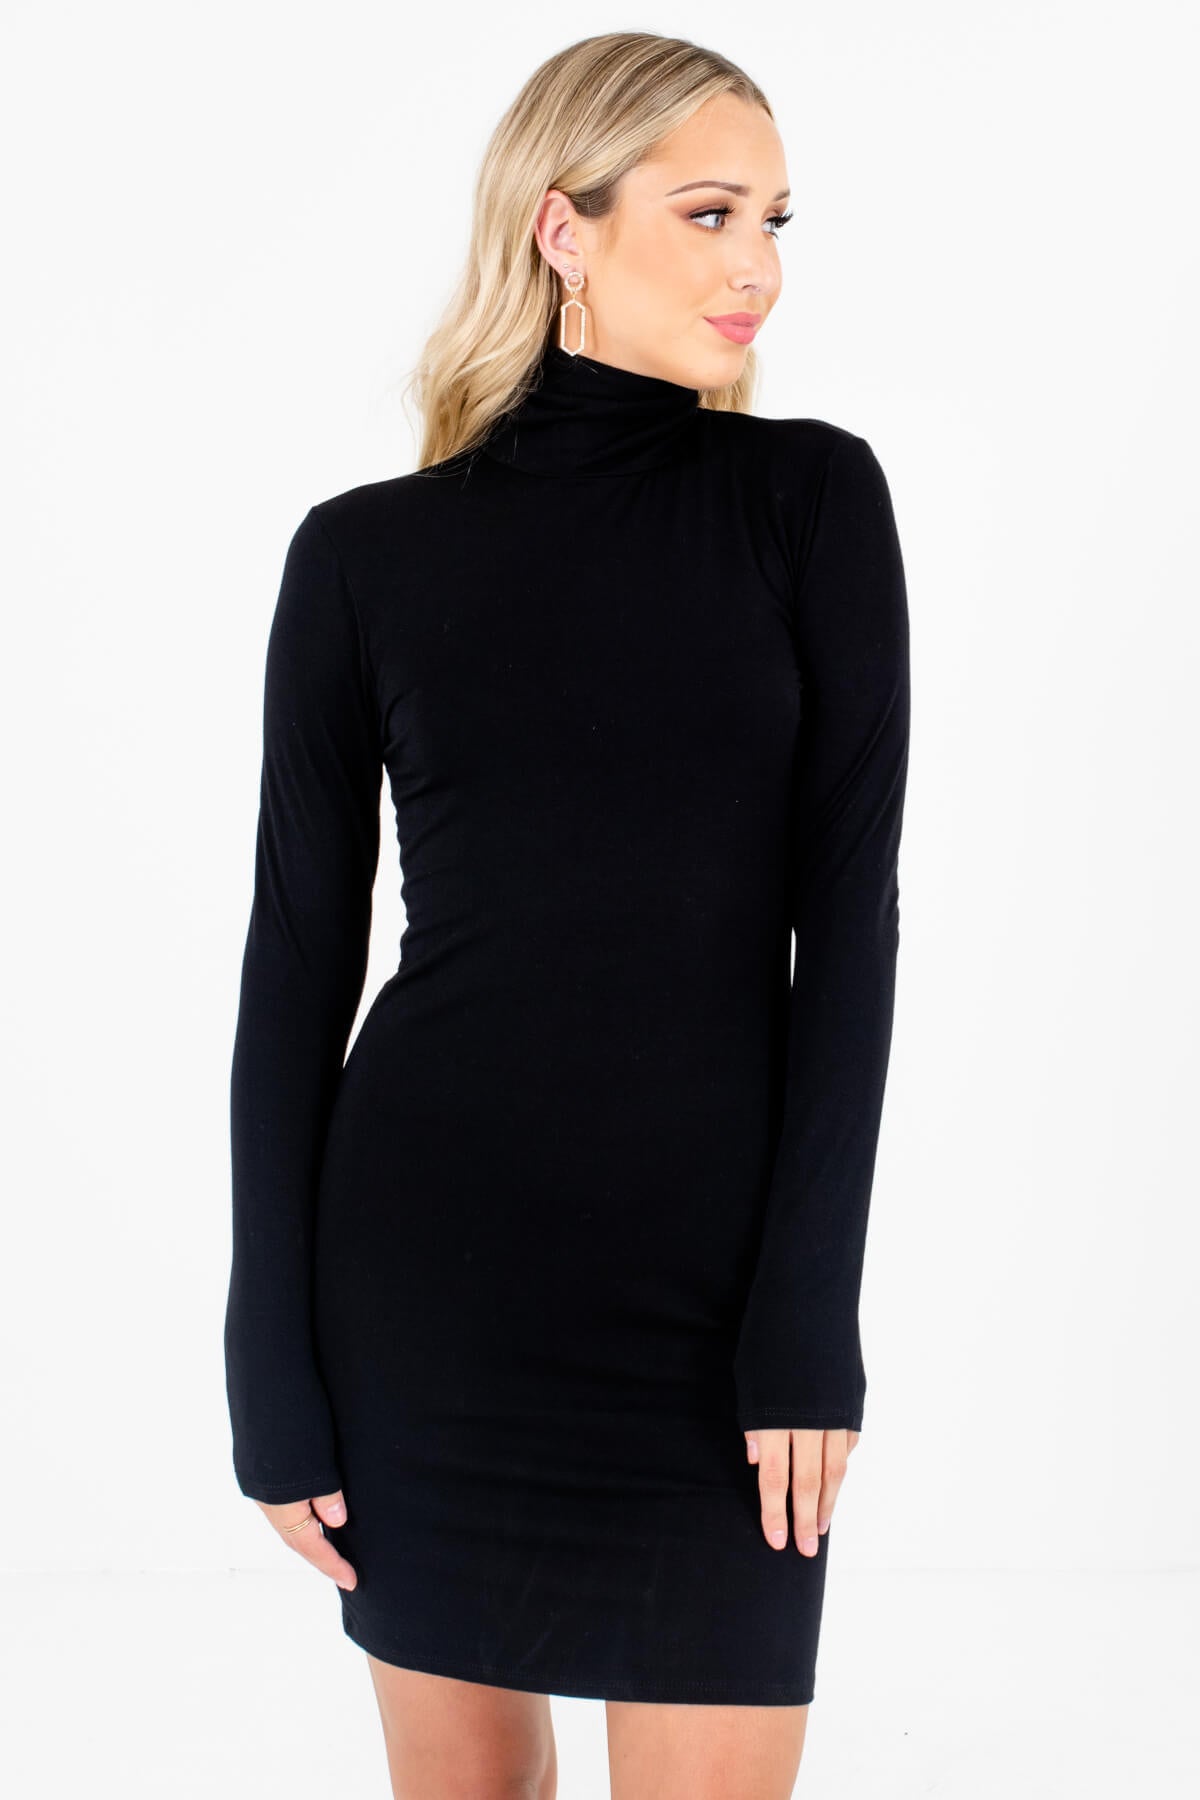 Black Night Out Boutique Mini Dresses for Women